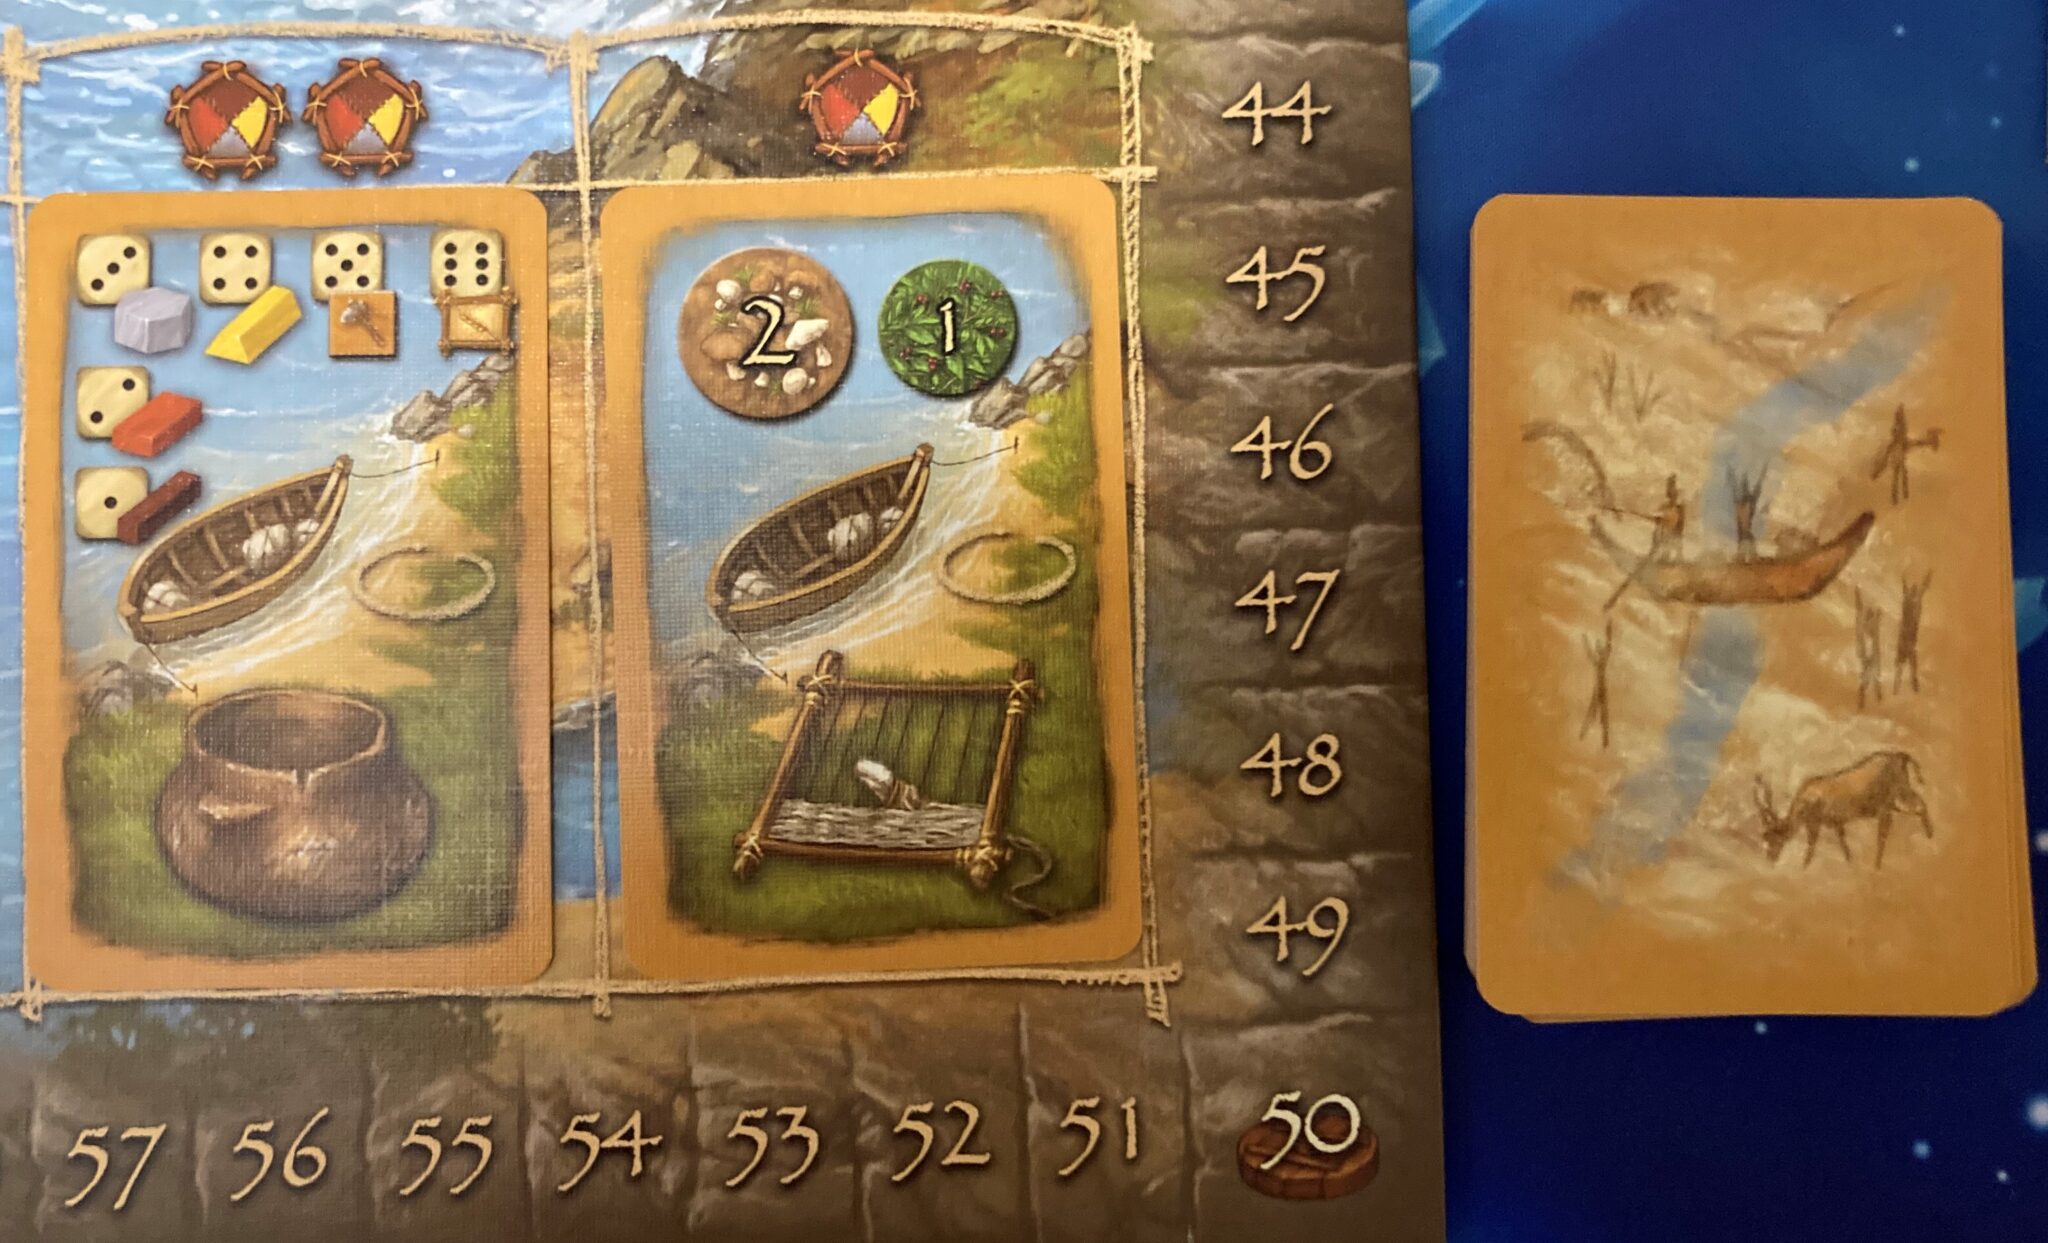 stone age board game civilization card and deck